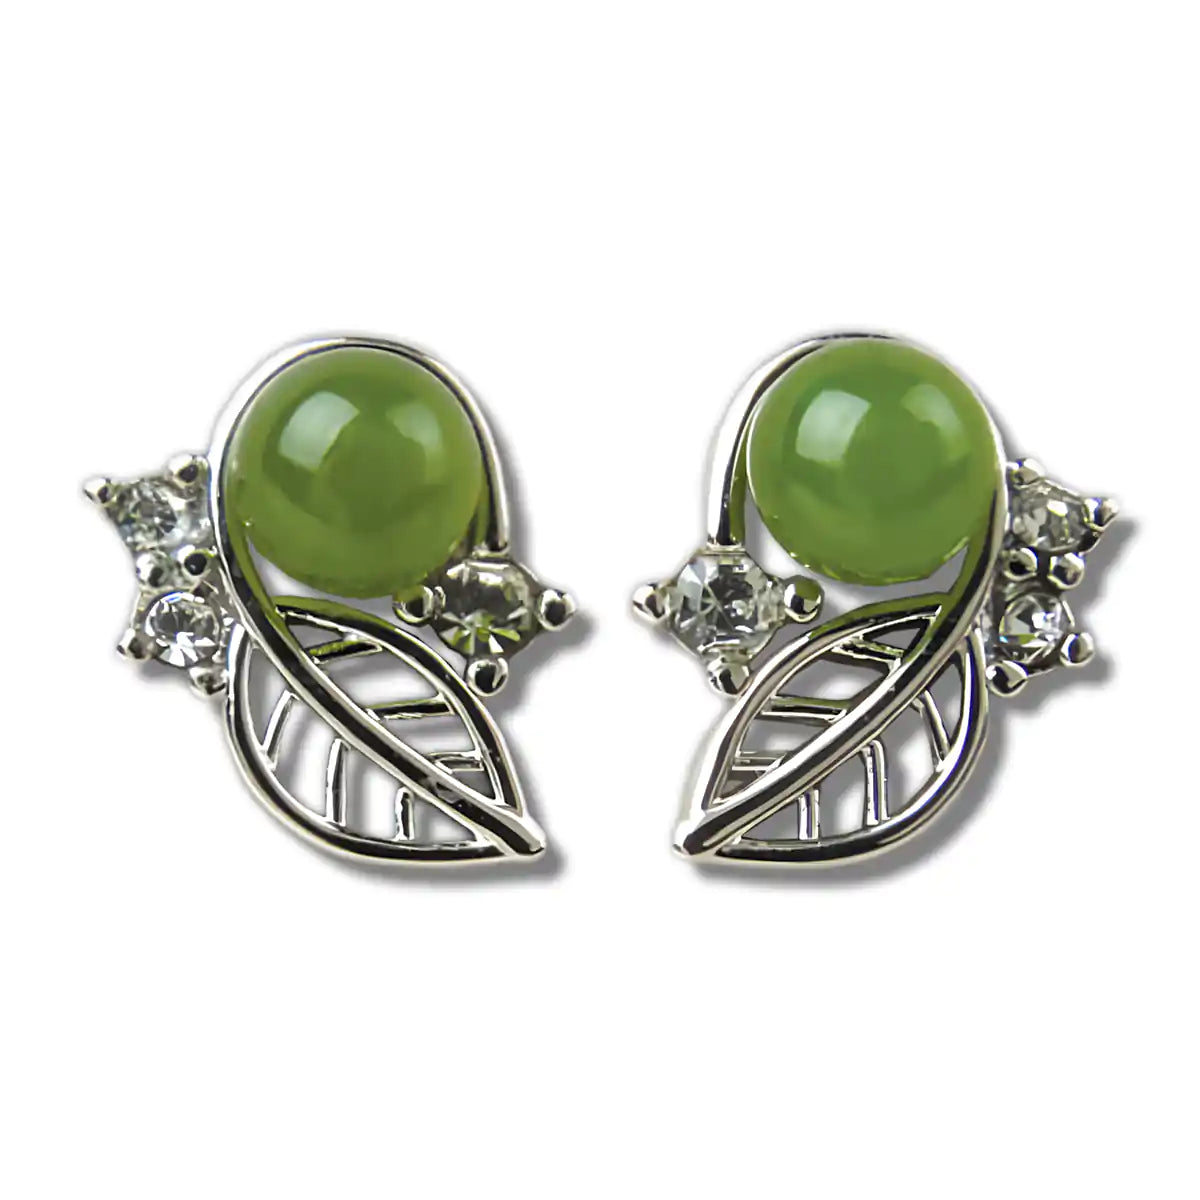 Jade garden grove earrings